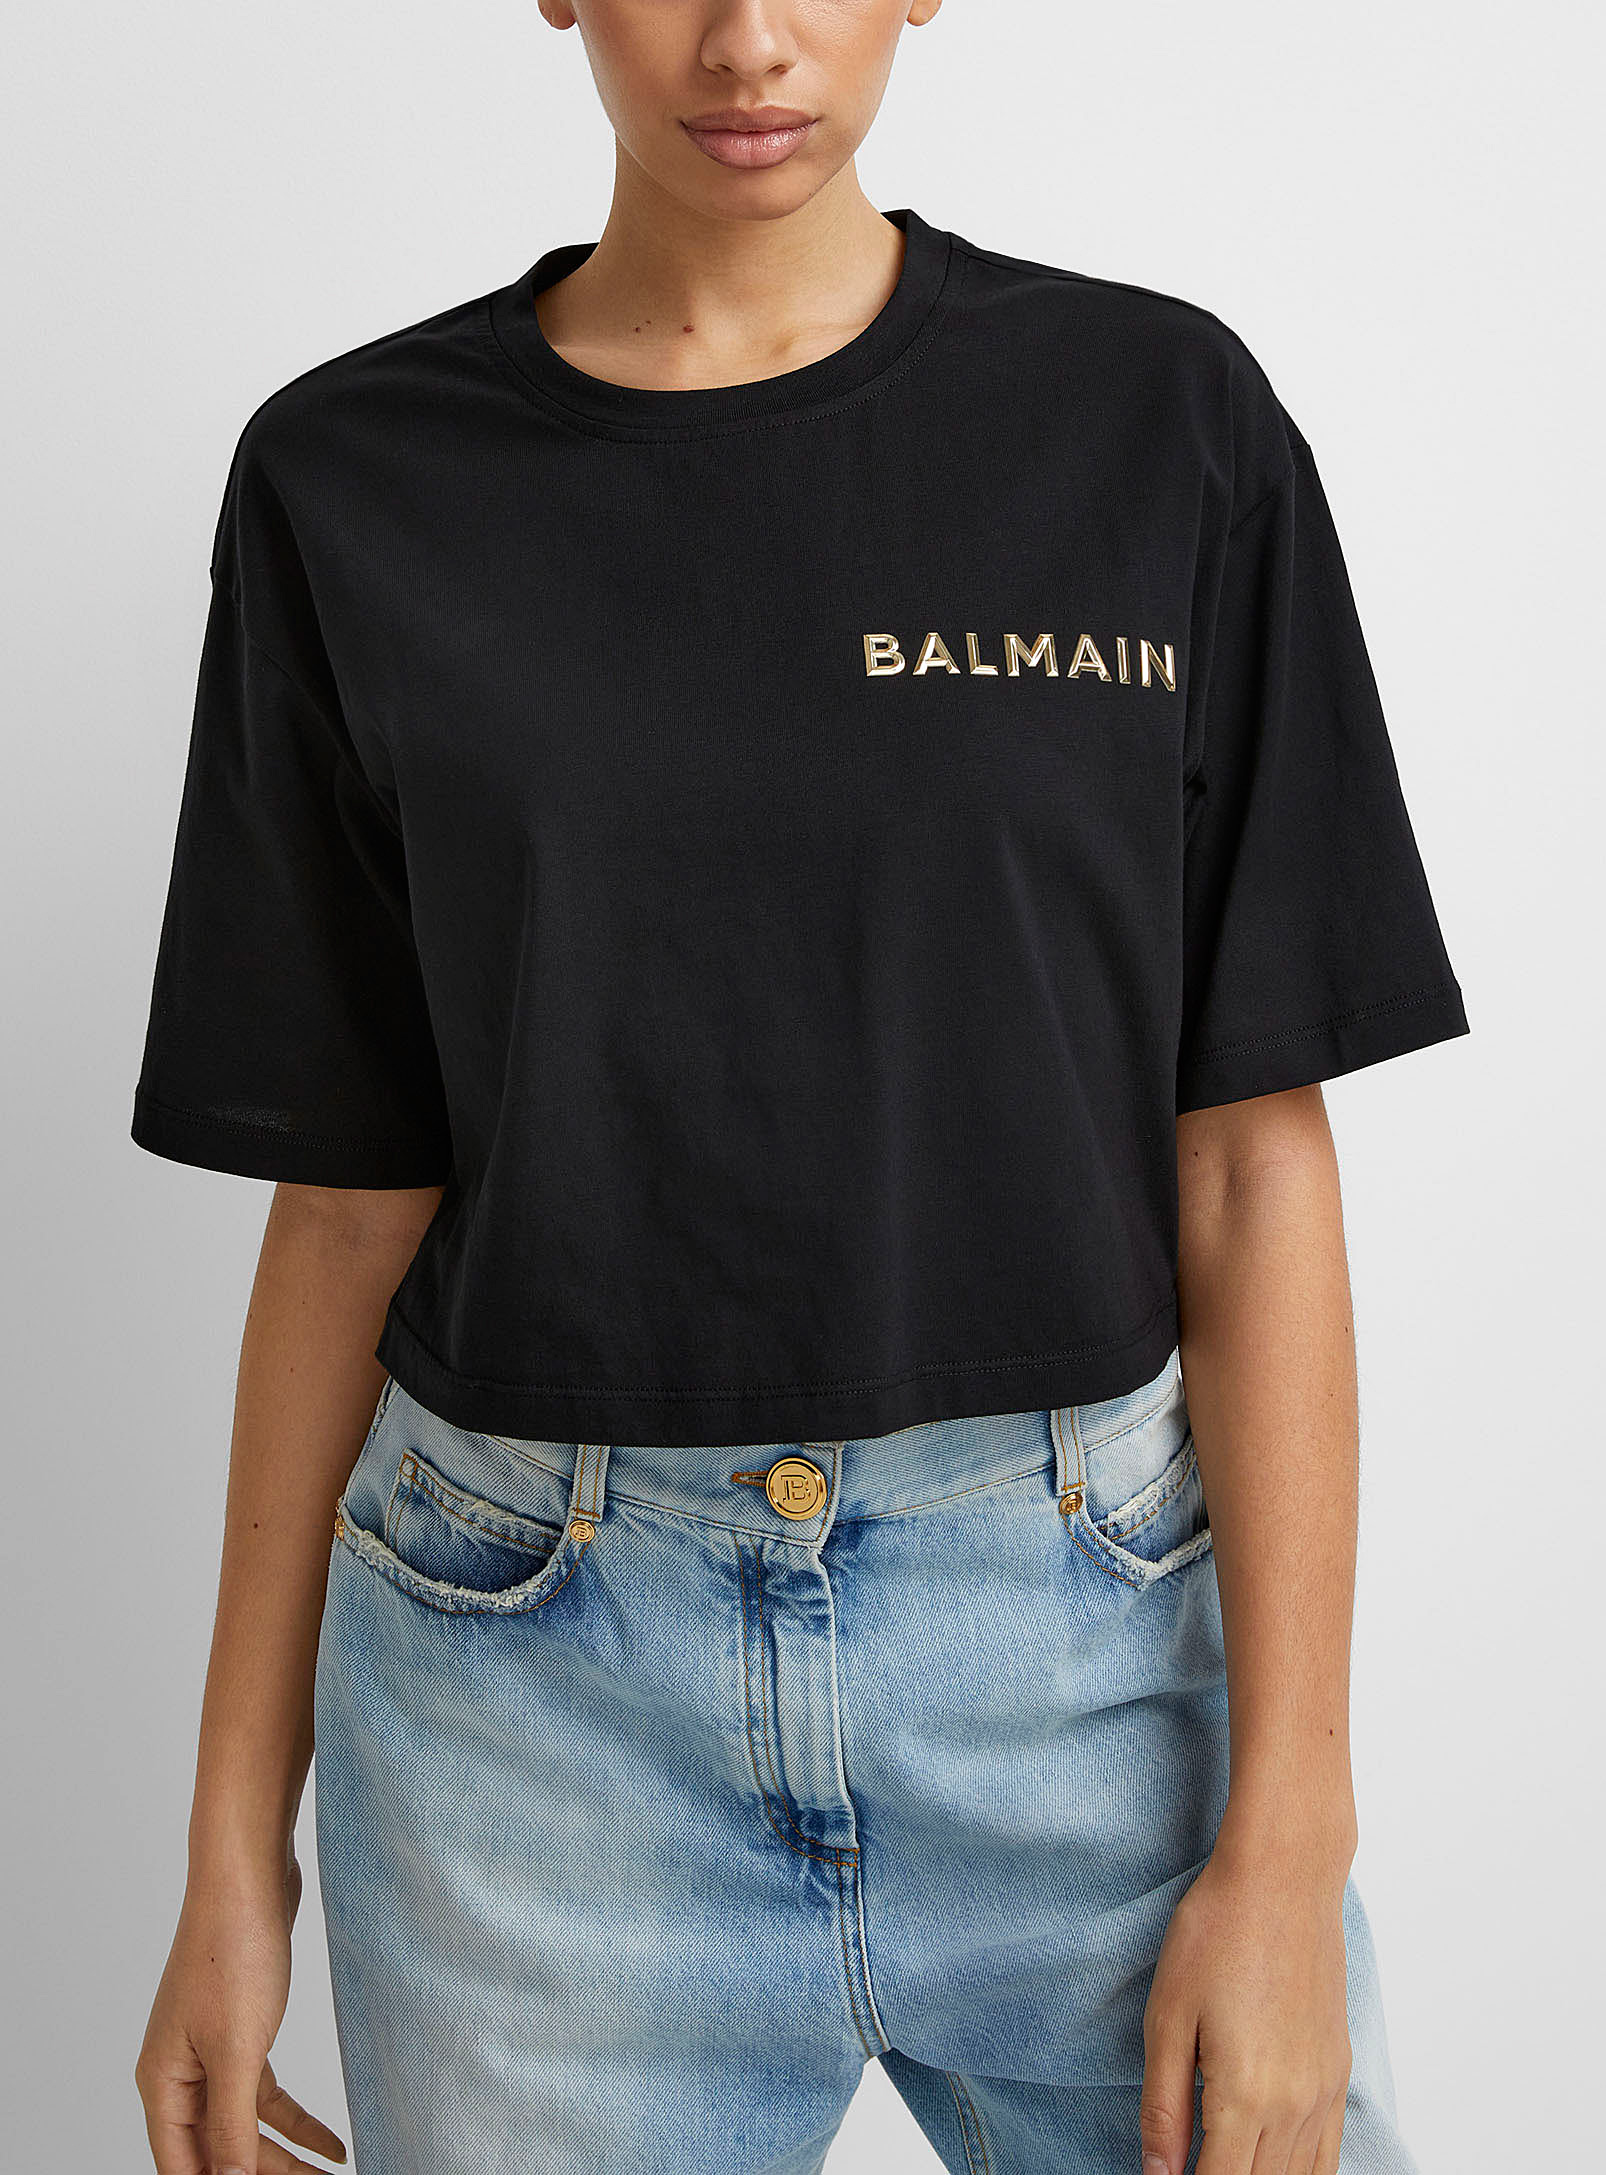 Balmain - Le t-shirt court signature métallisée